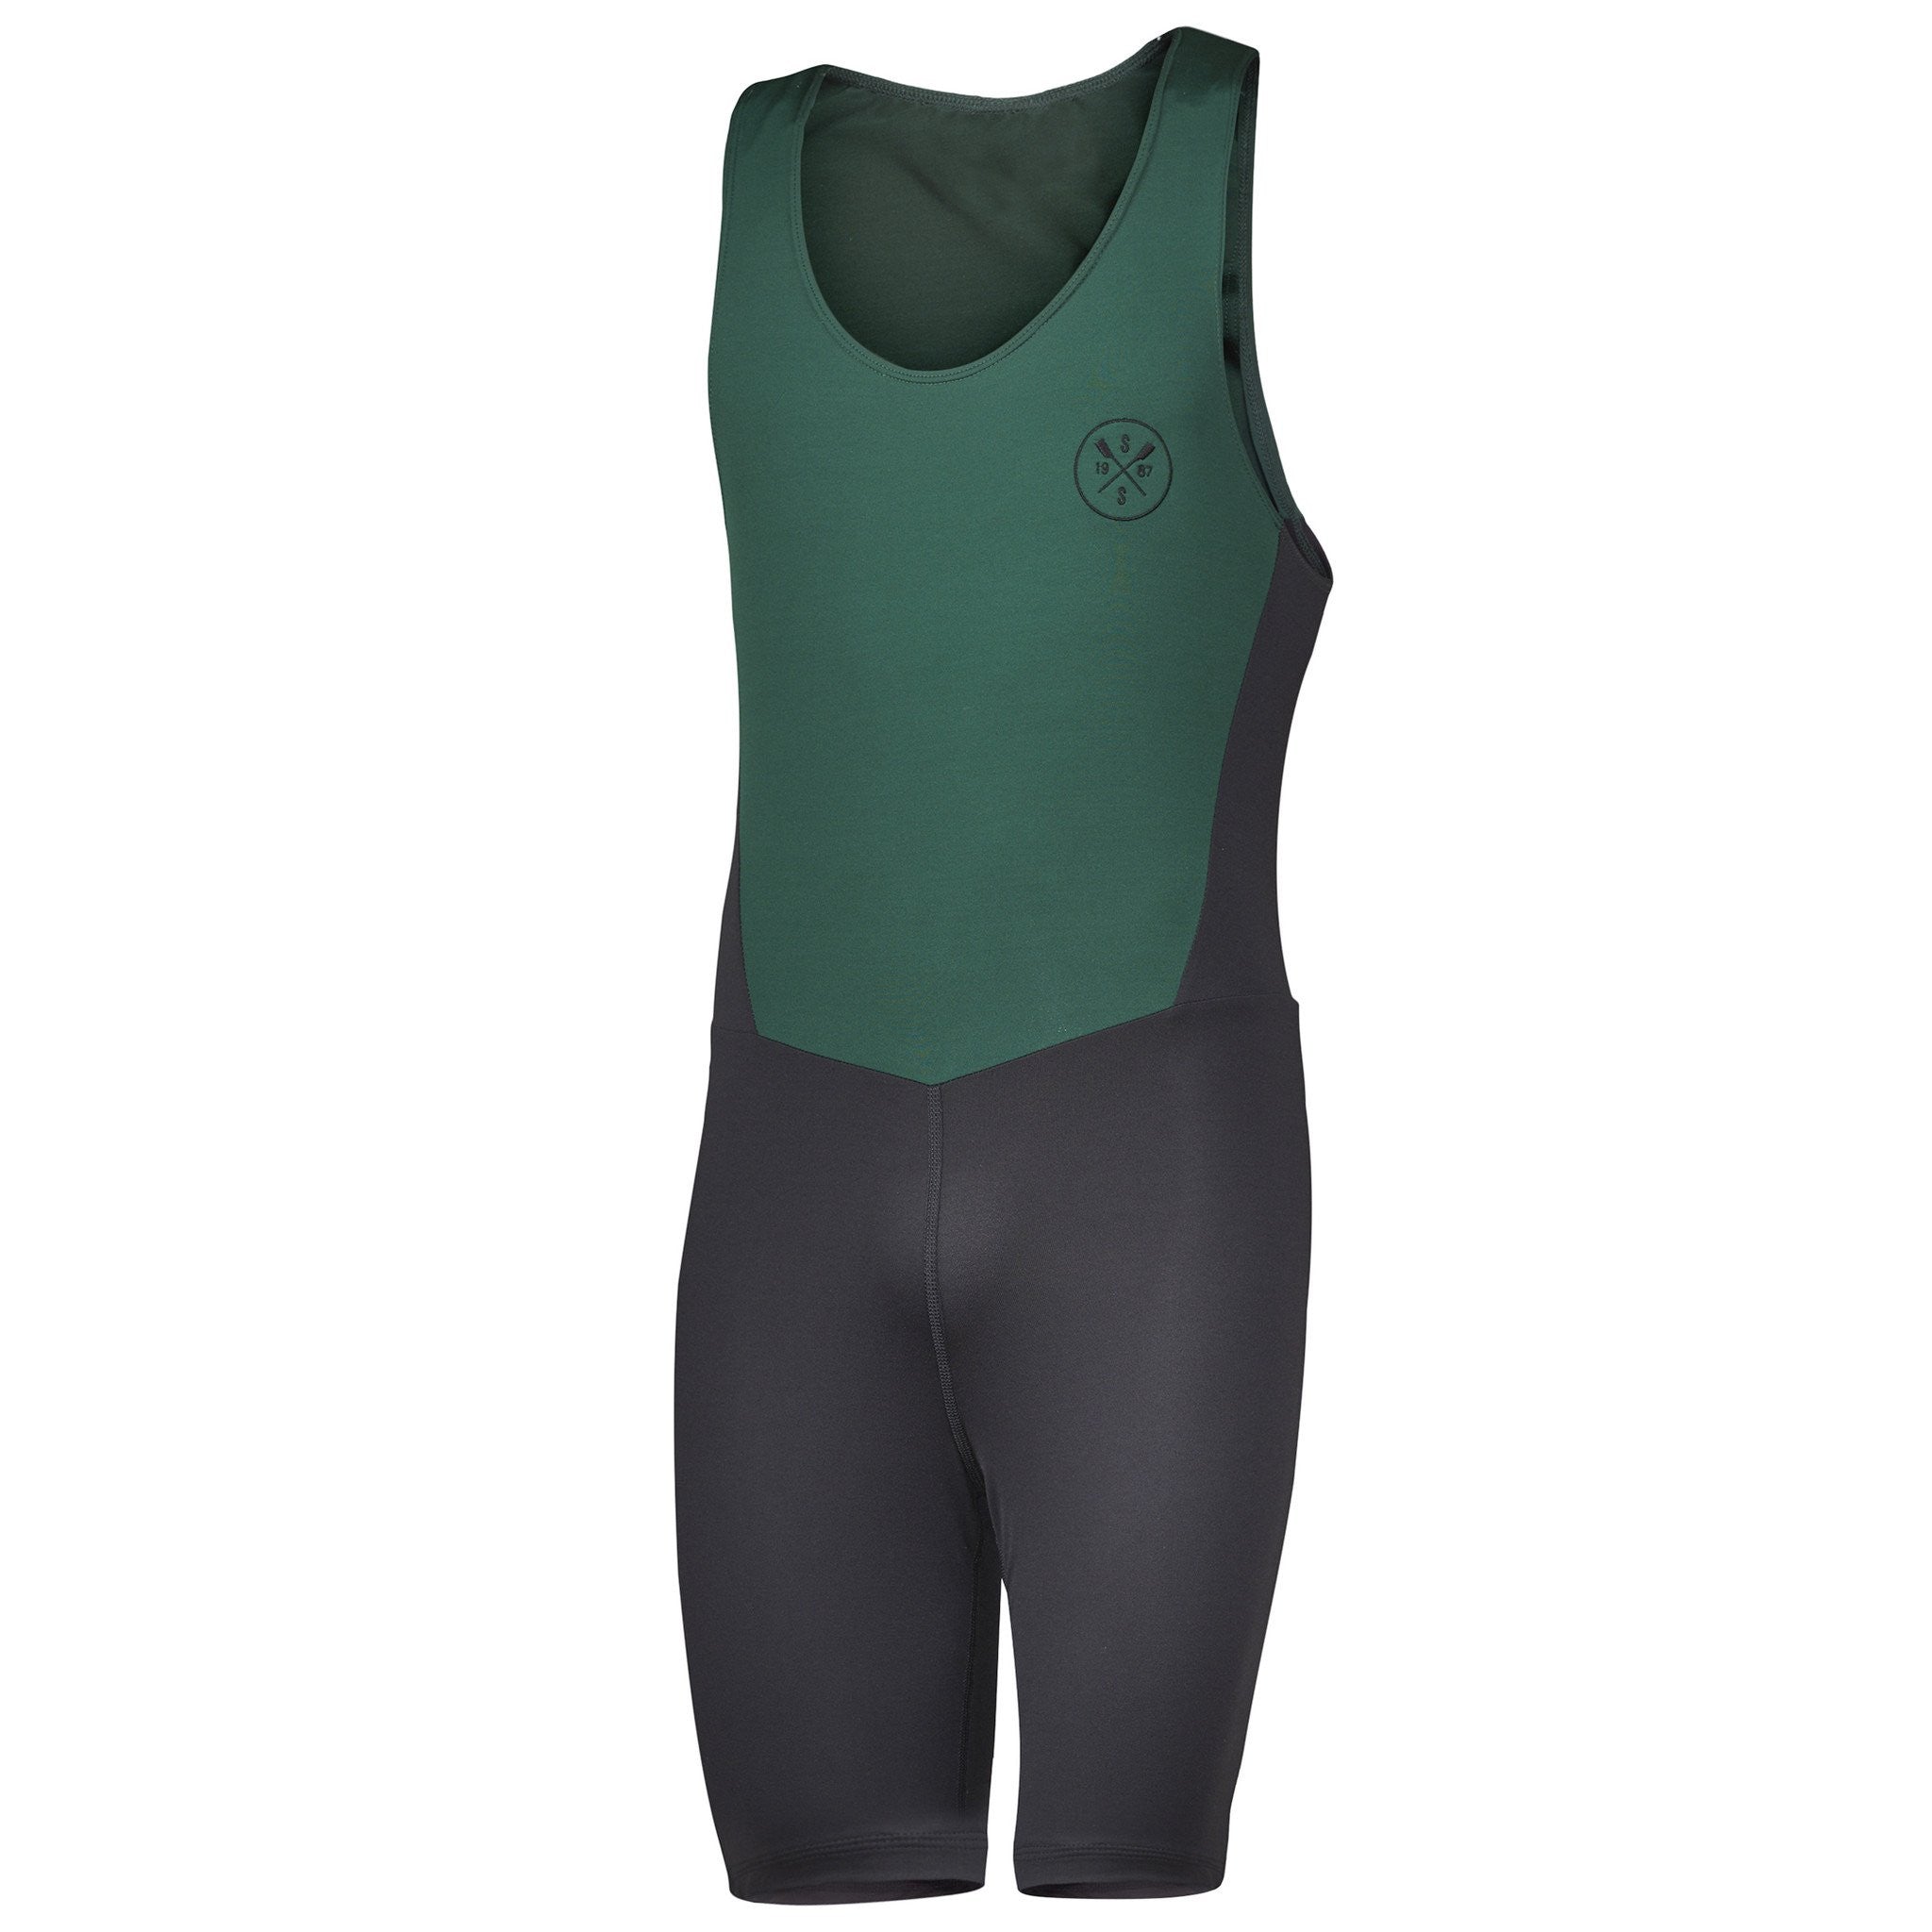 Sew Sporty Men's Unisuit (Black/Green)